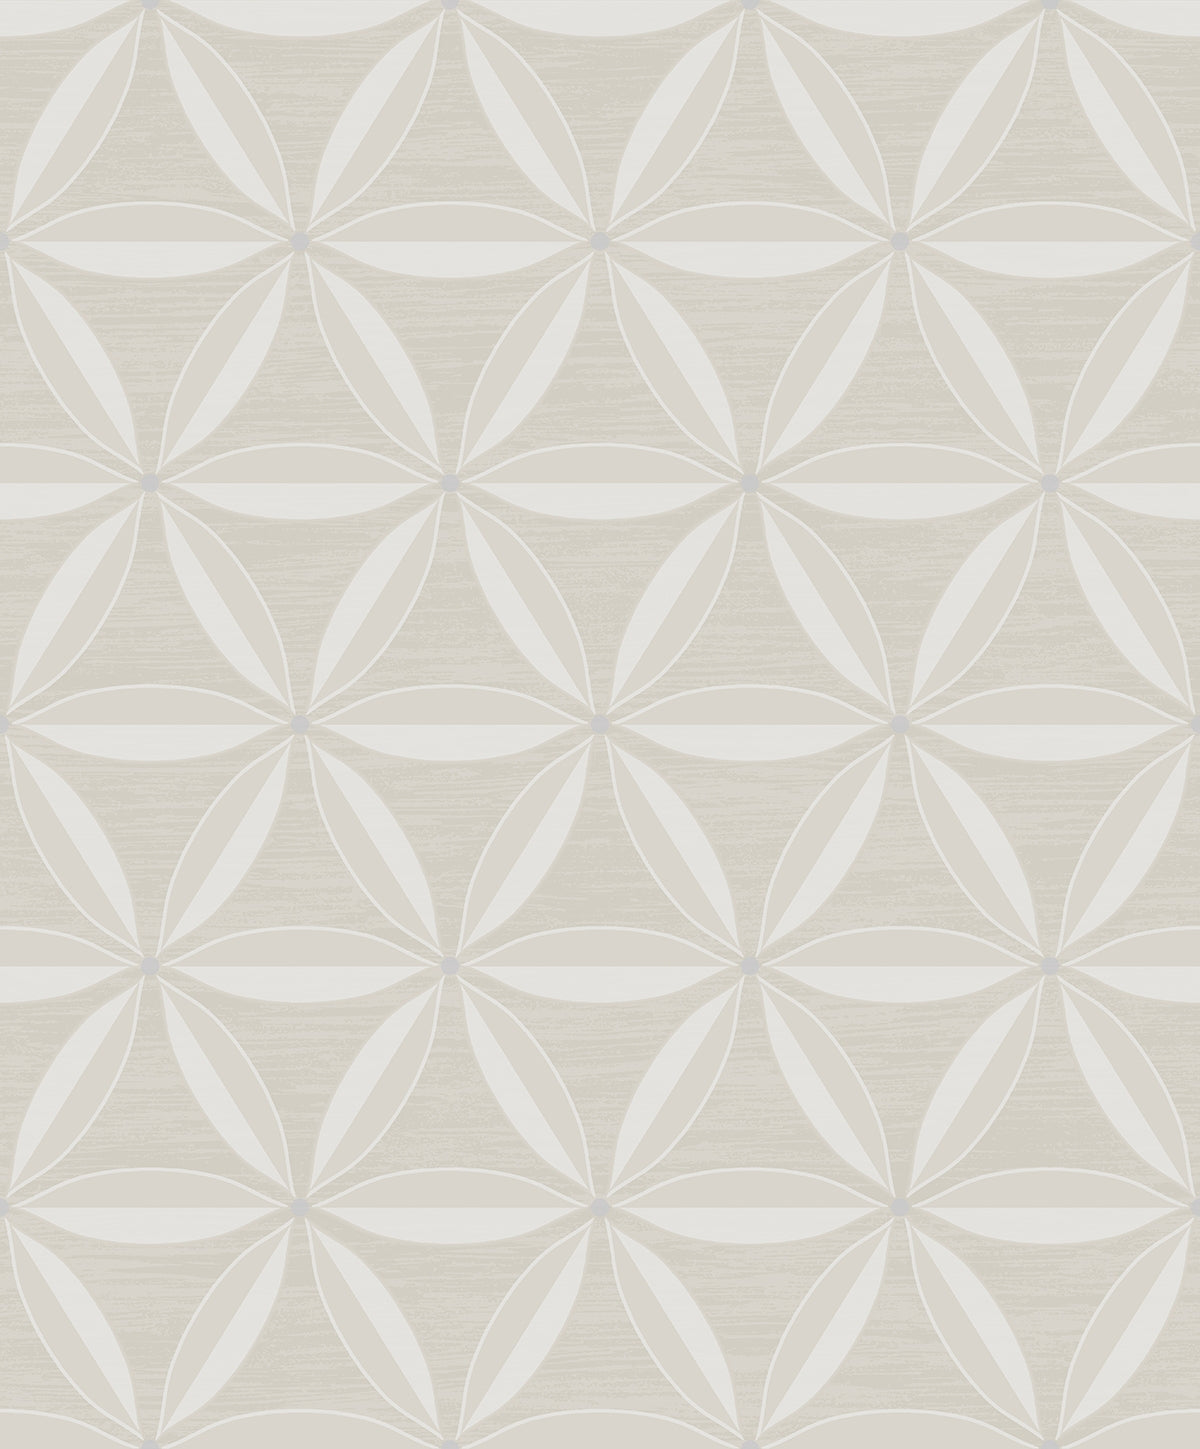 AW71703 | Lens Geometric, Beige - Seabrook Designs Wallpaper